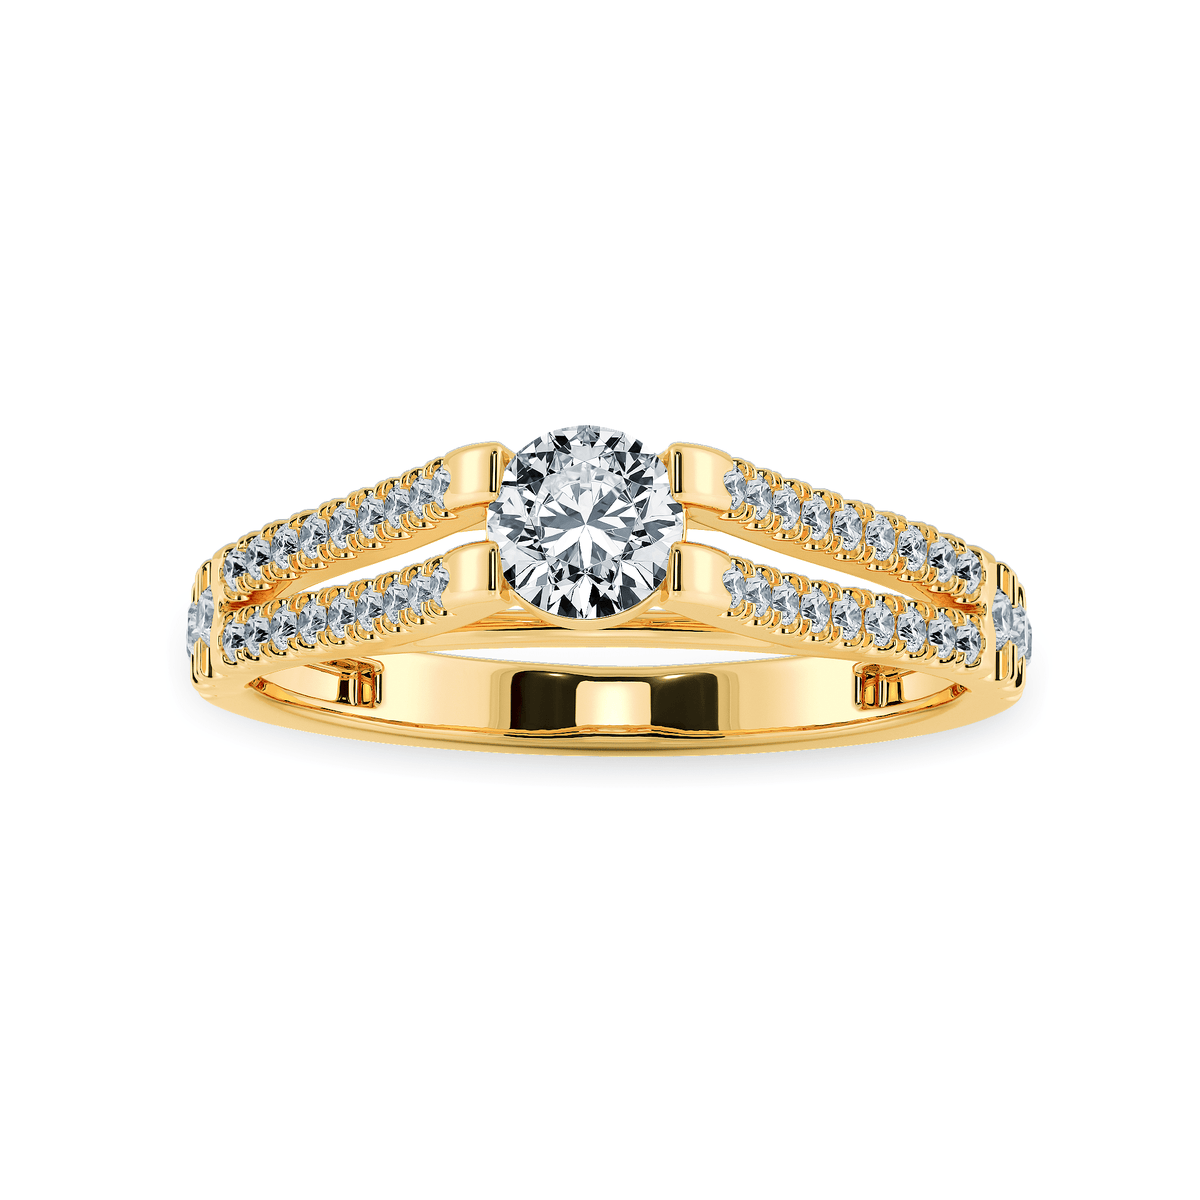 Buy 1250+ Diamond Rings Online   - India's #1 Online